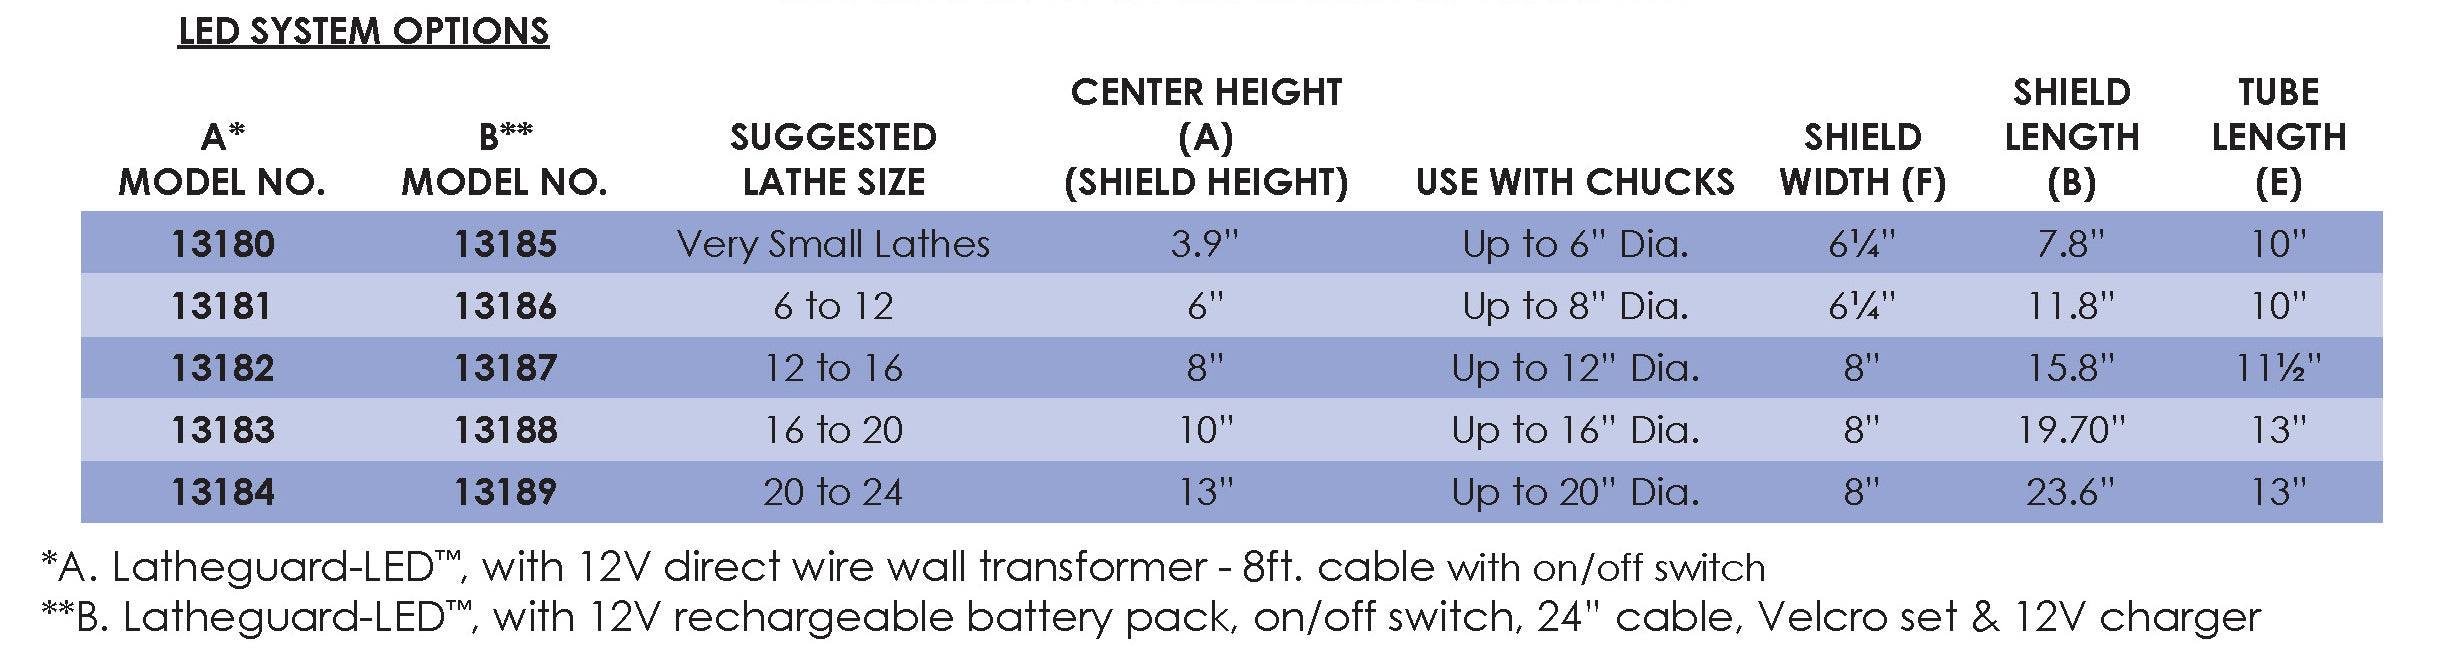 Latheguard-LED - Medium - 12V Rechargeable Battery Pack